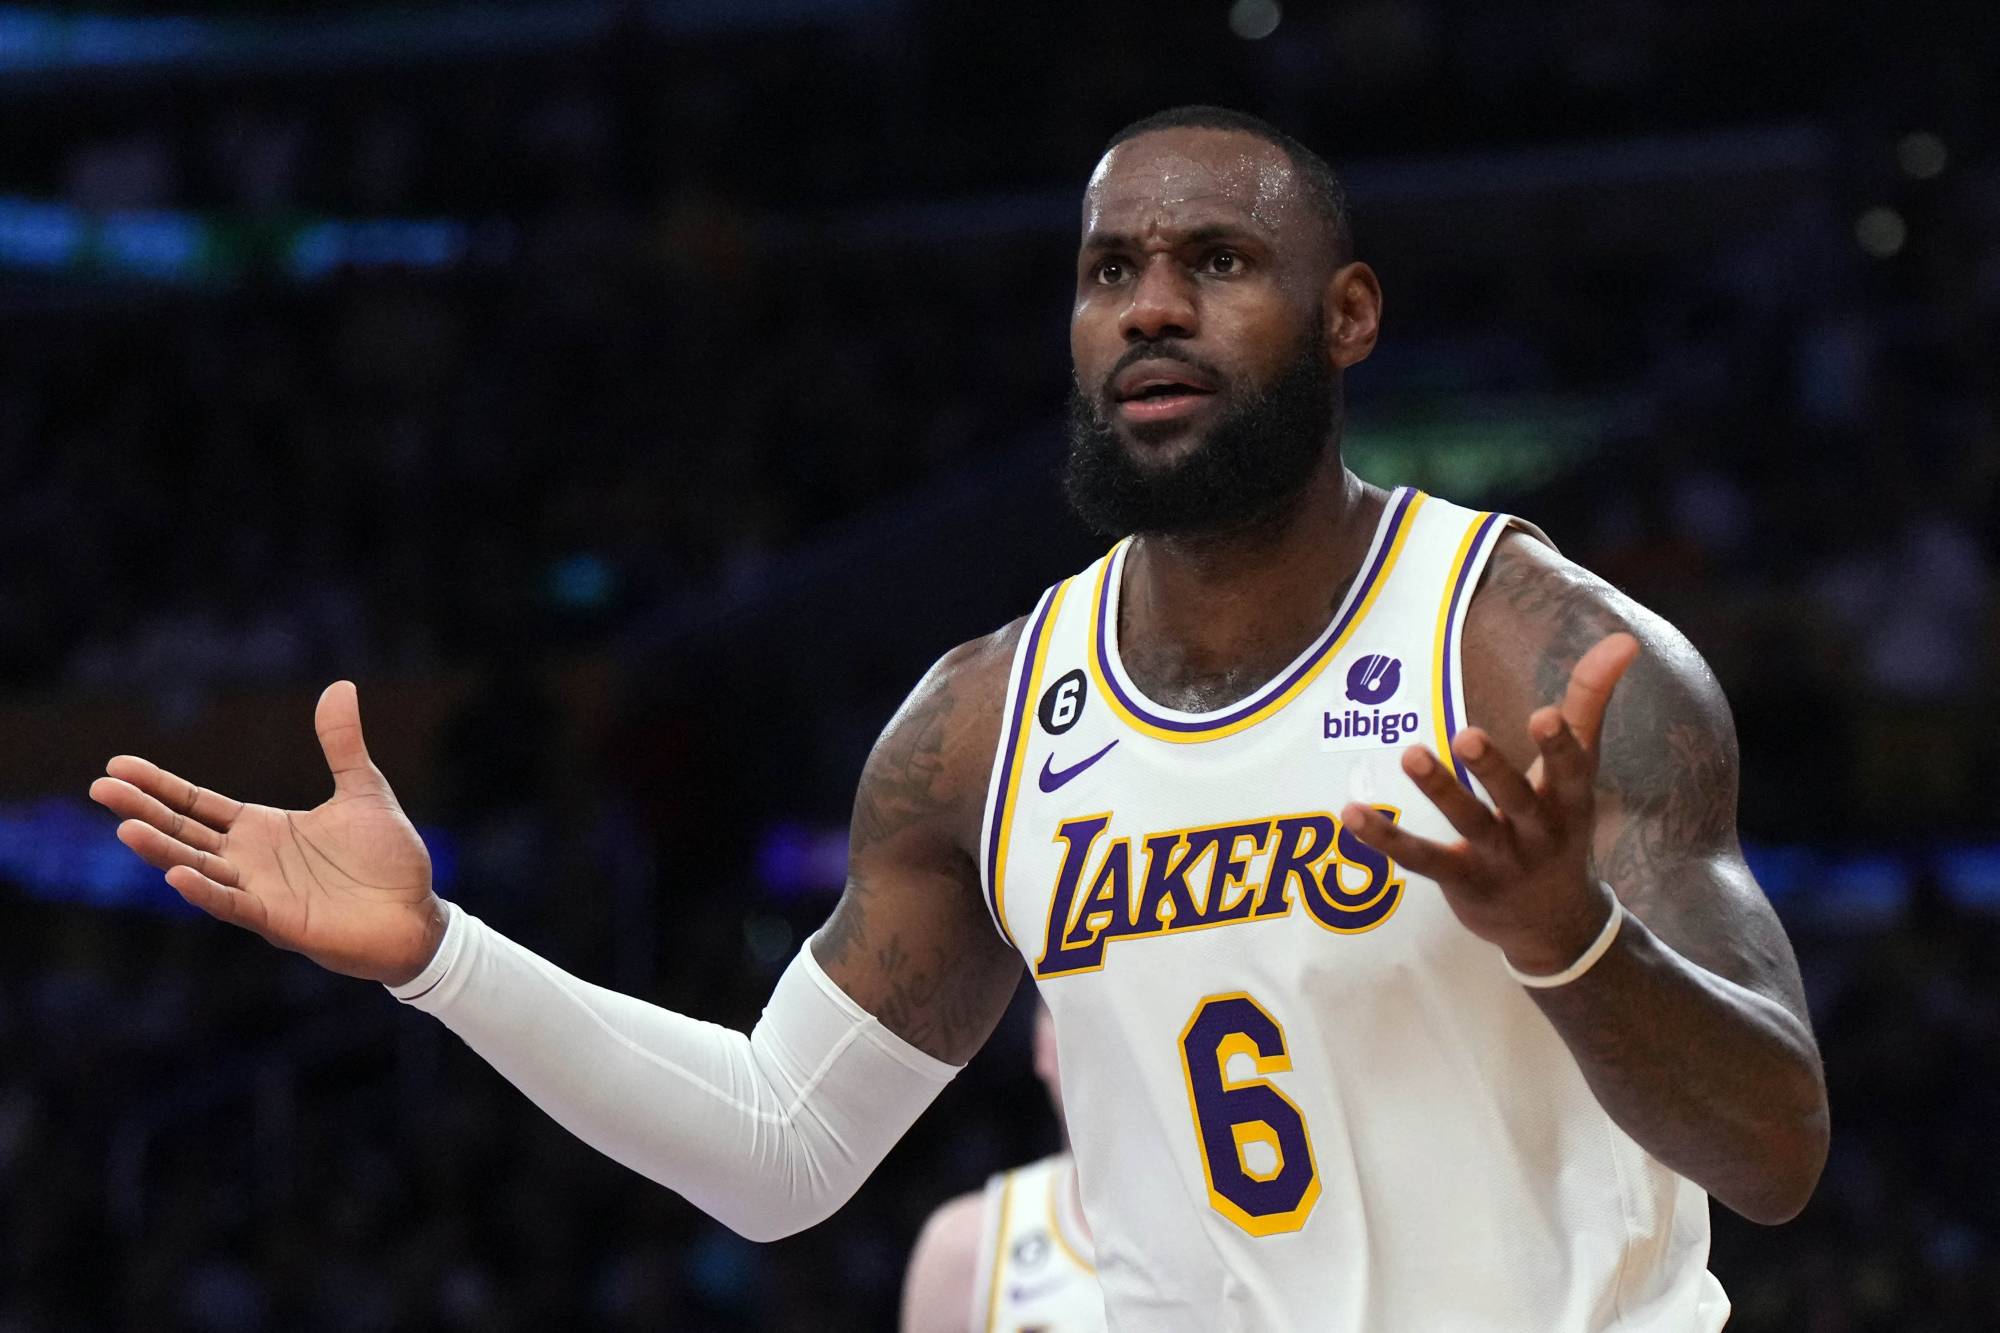 Lakers legend LeBron James to change jersey no. to 6 next season